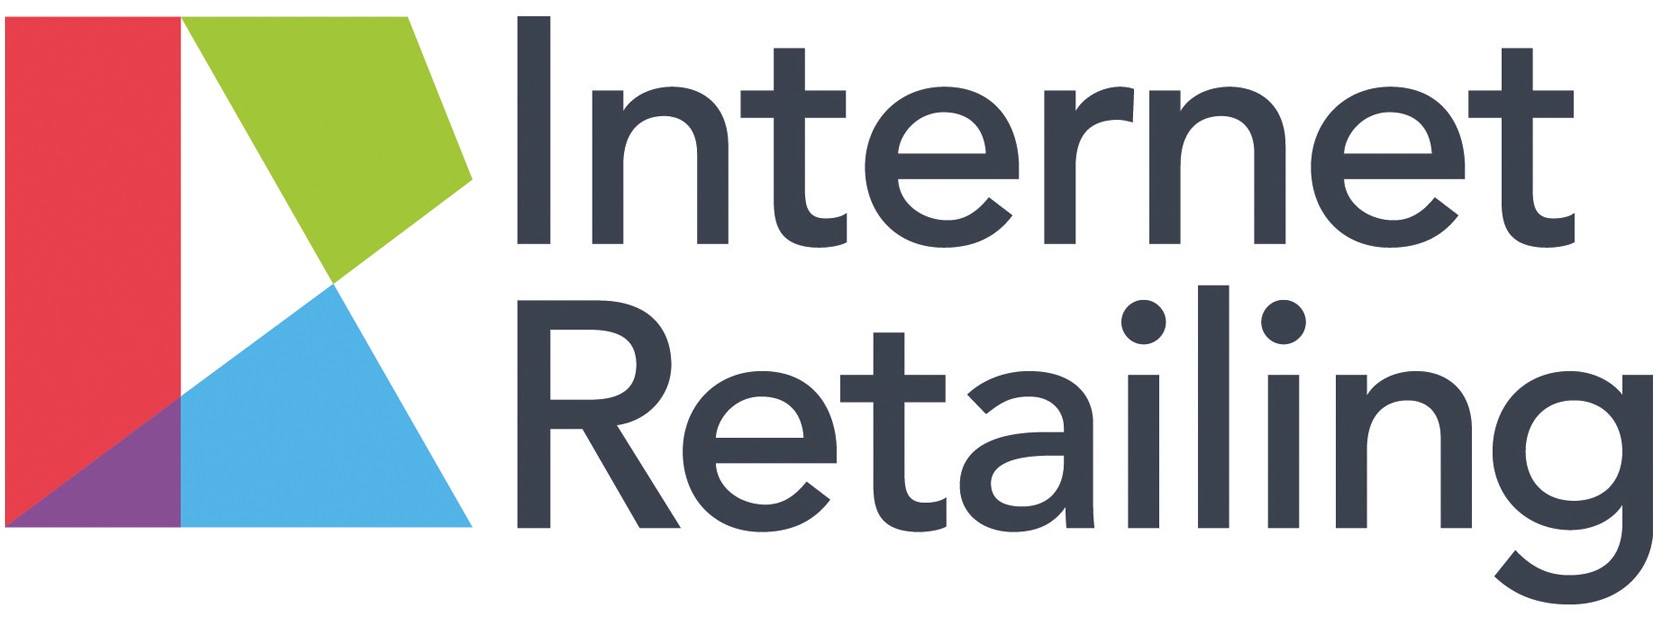 internet-retailing-1